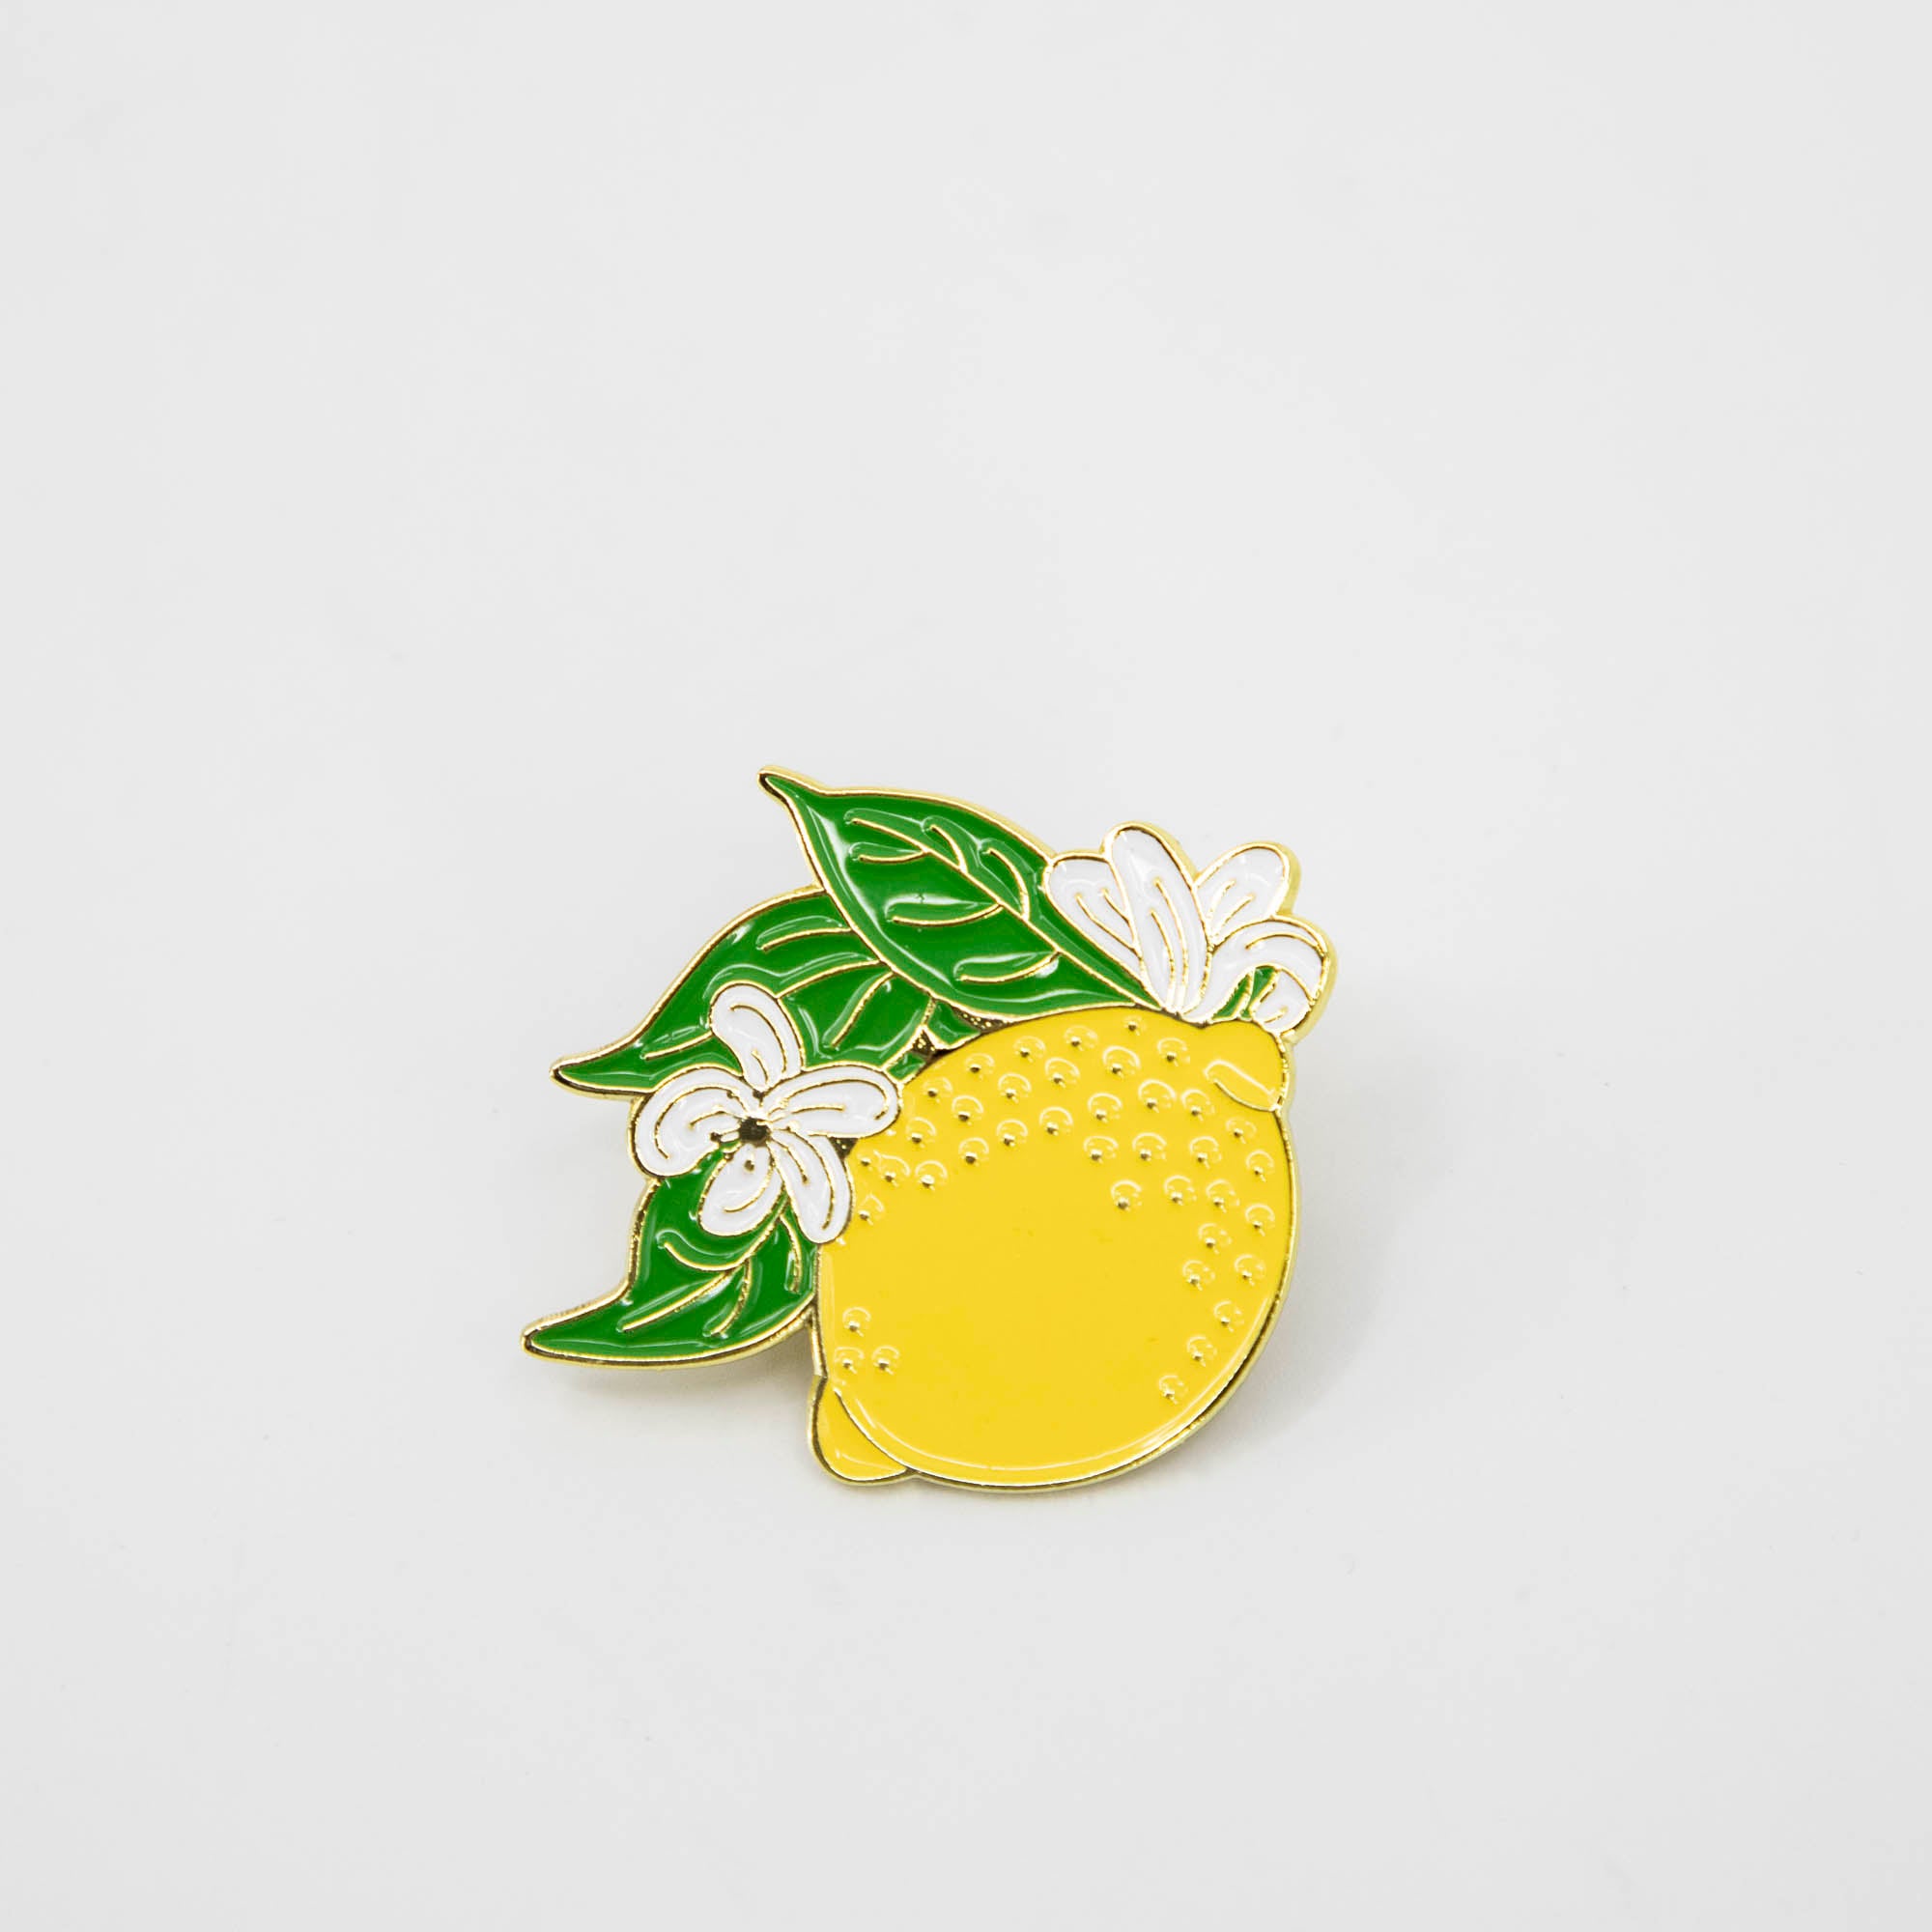 A vibrant Hester &amp; Cook Lemon Enamel Pin adorned with lush leaves that embodies the freshness of citrus fruits.